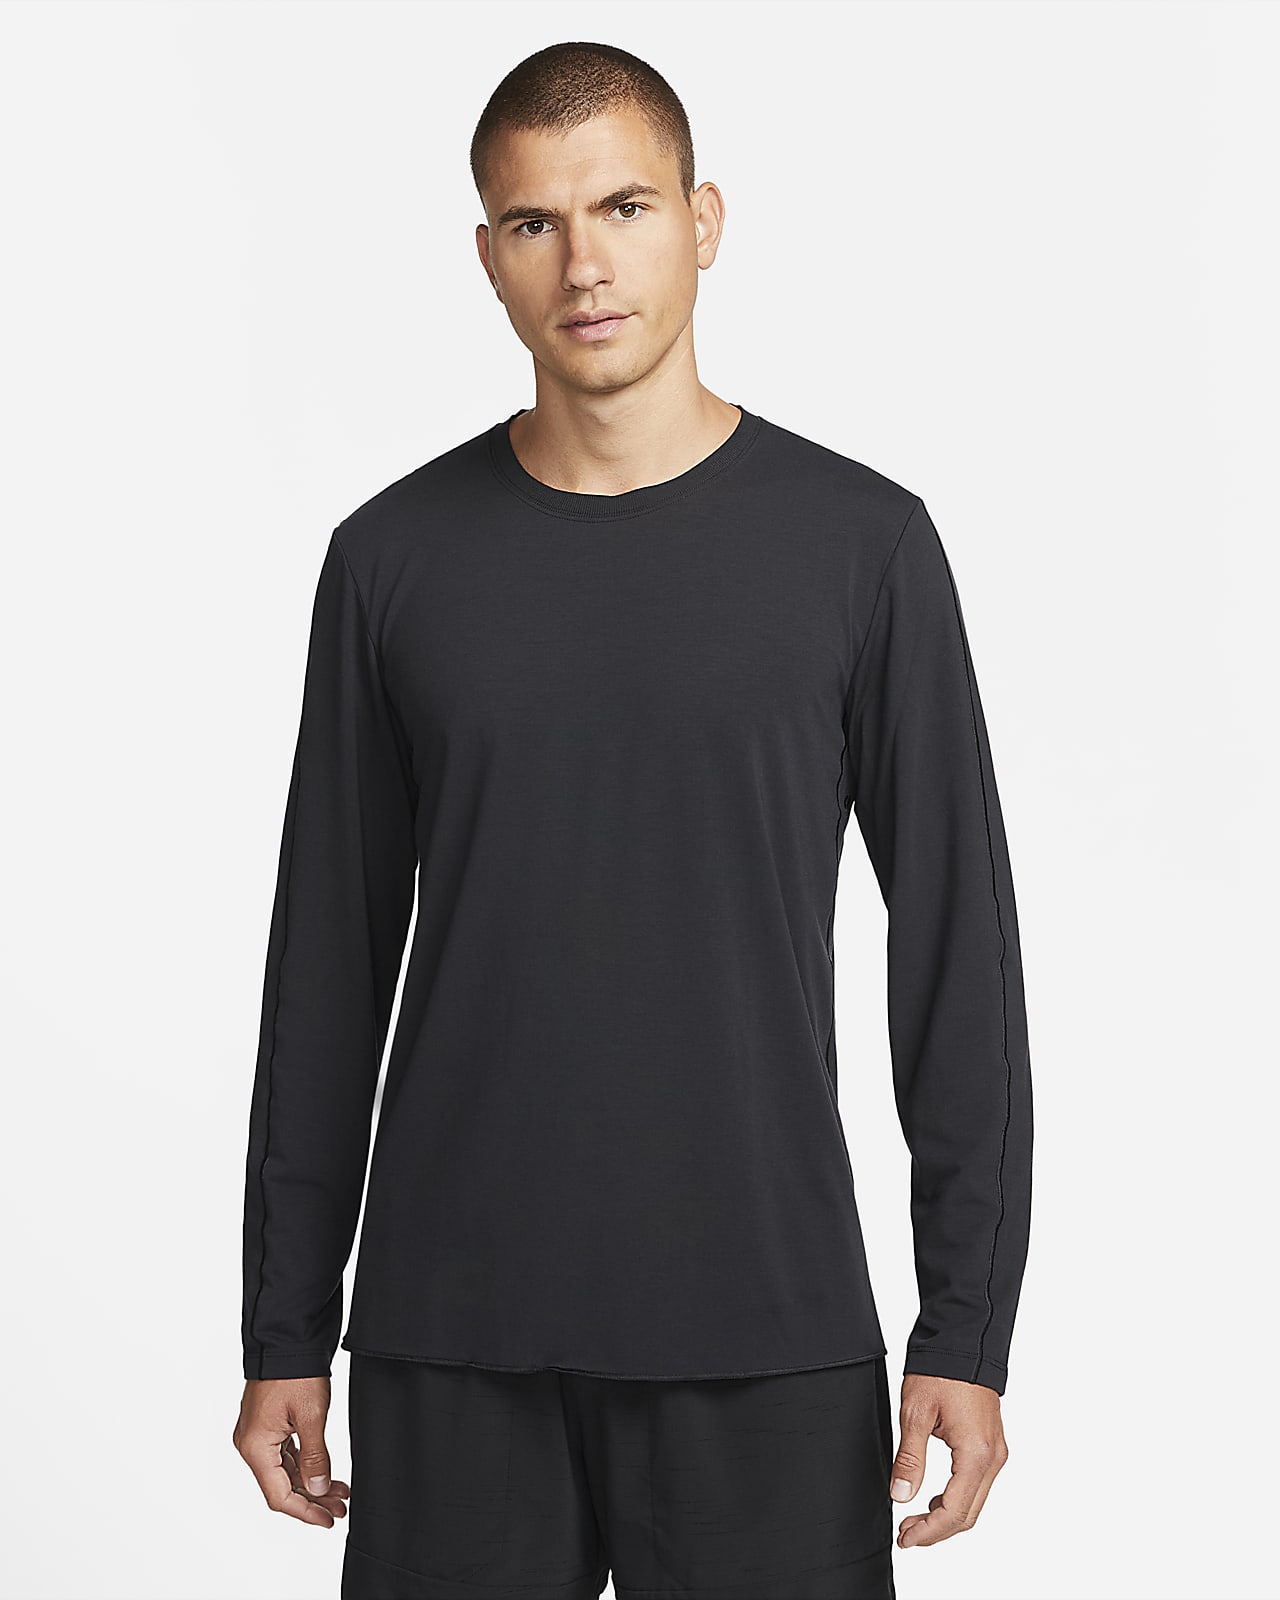 Nike Dri-FIT Yoga Men's Long-Sleeve Top